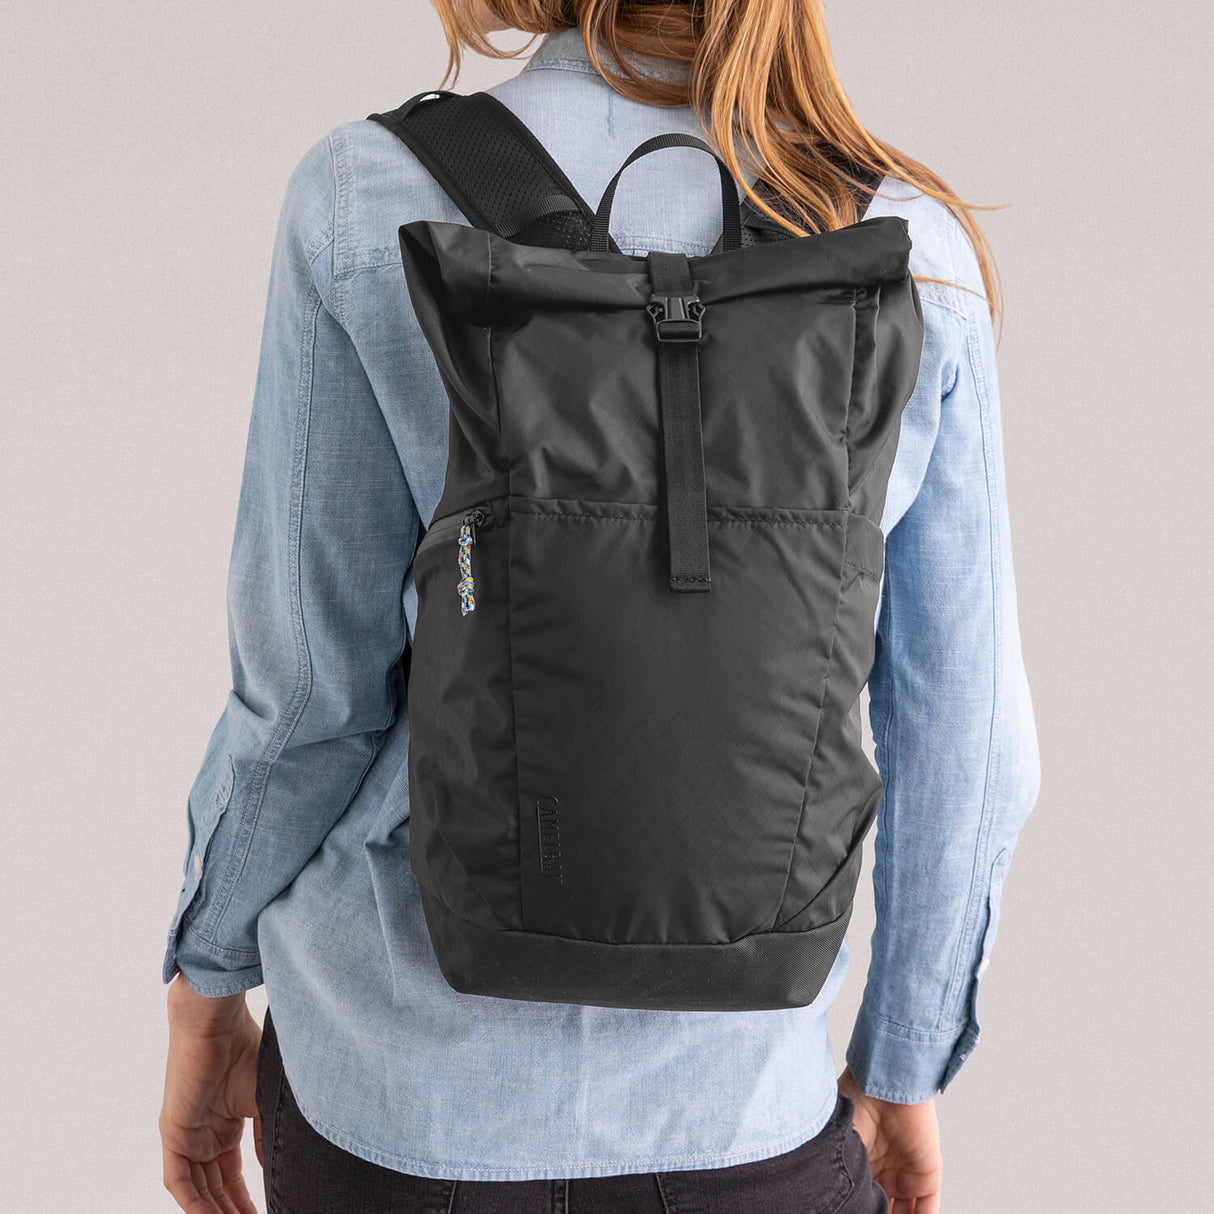 CamelBak Pivot Roll Top Backpack - Printed